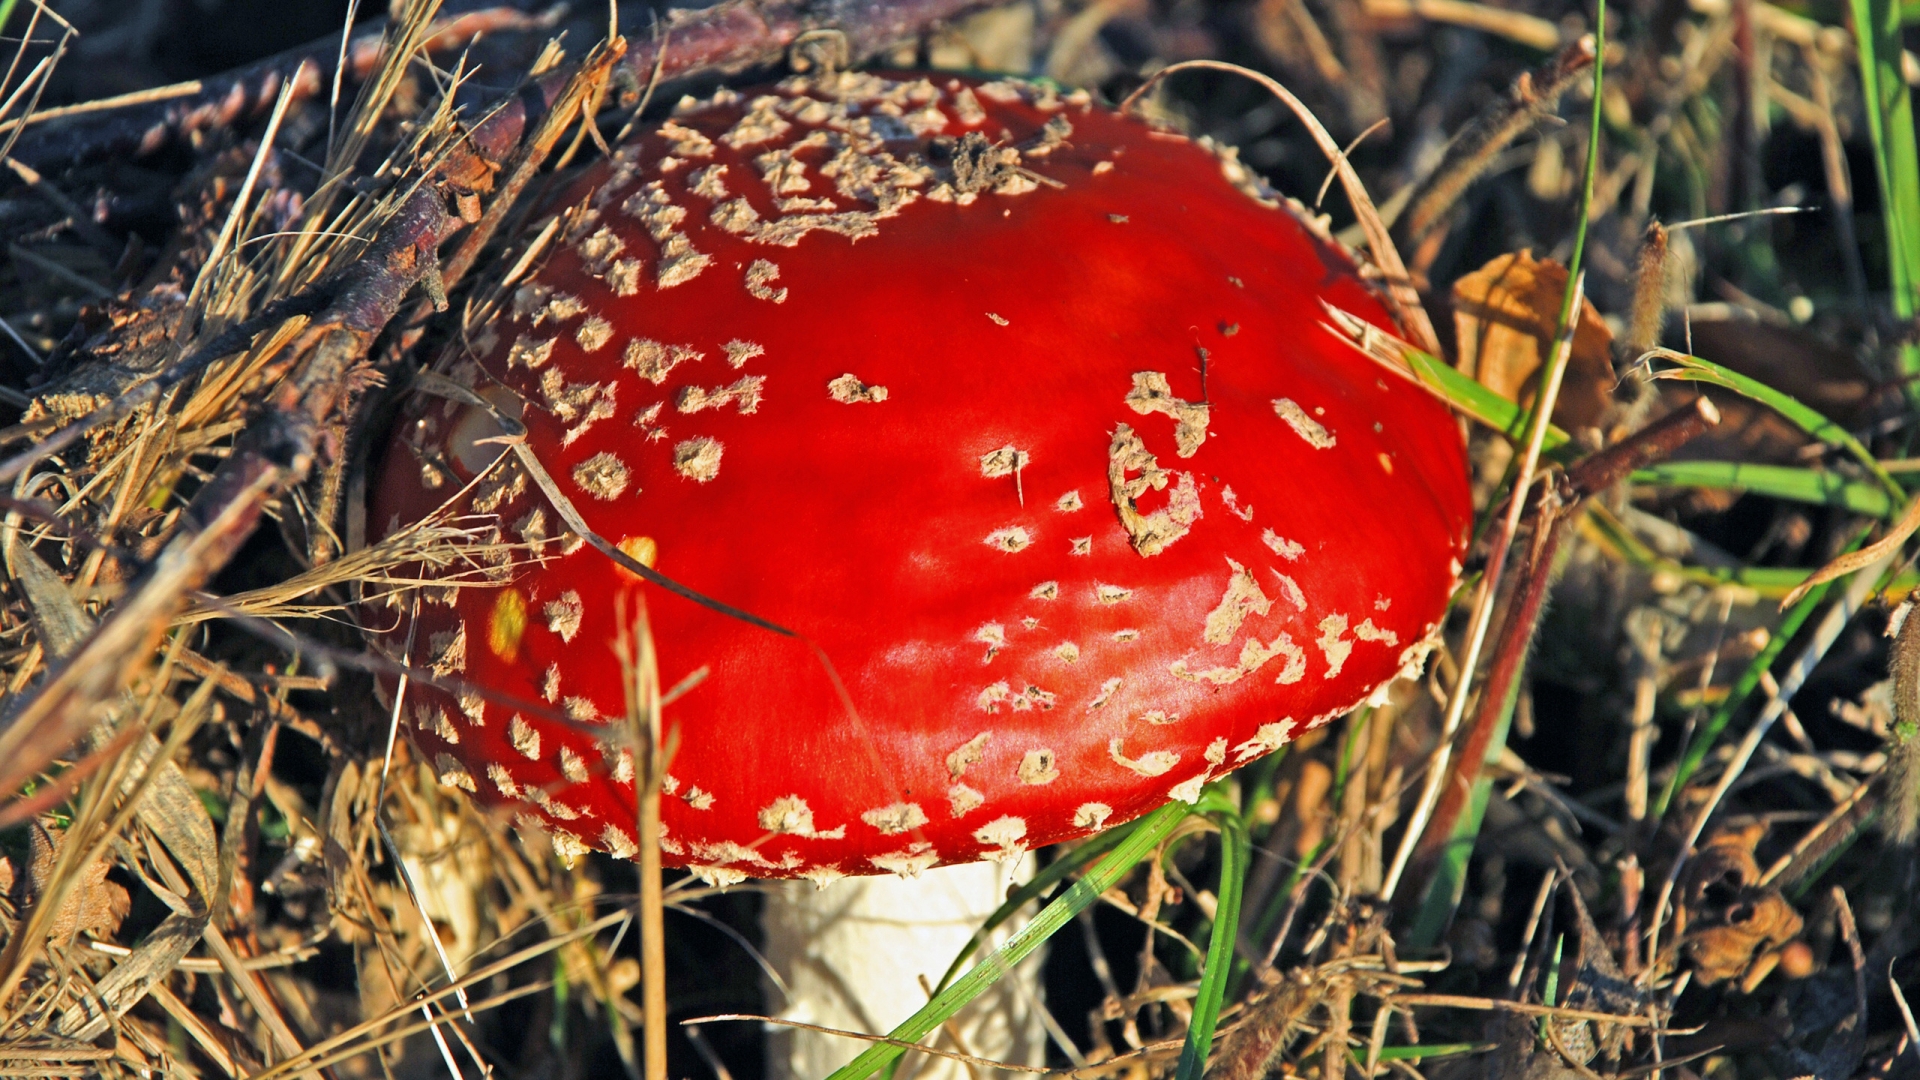 Red Mushroom for 1920 x 1080 HDTV 1080p resolution